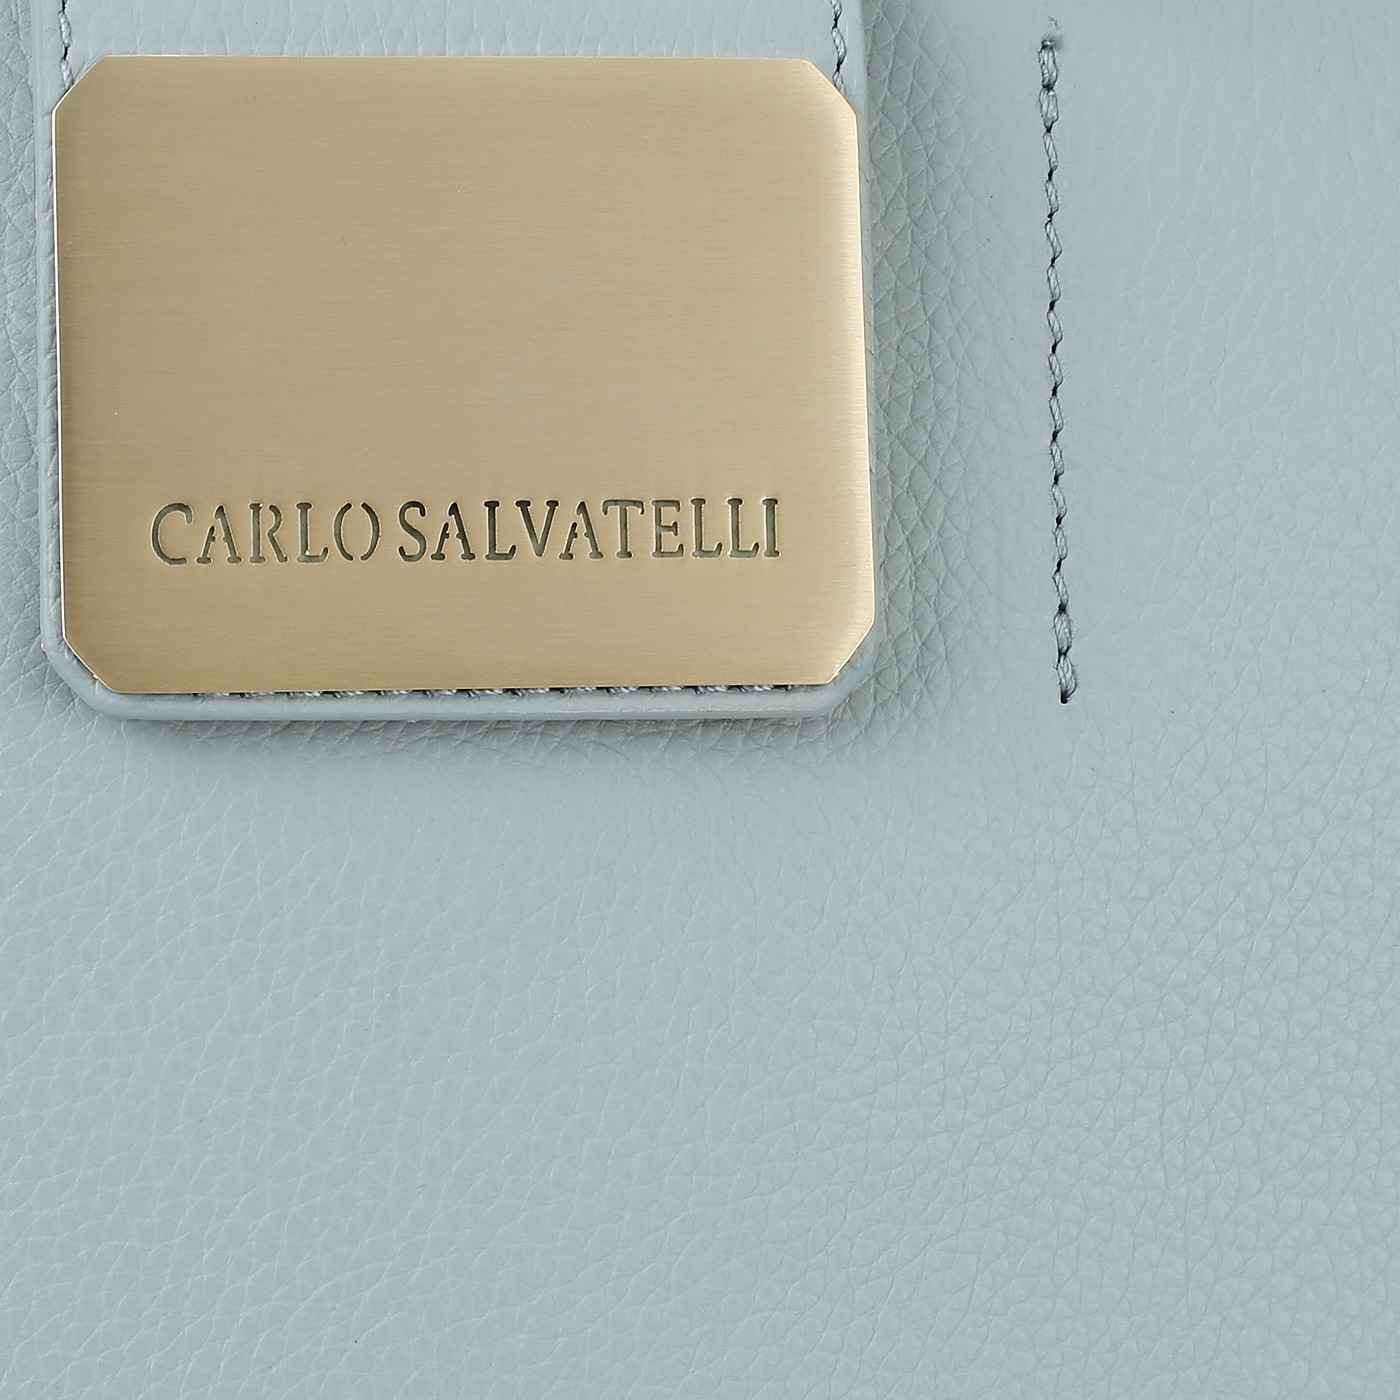 Кожаная сумка Carlo Salvatelli Gemma